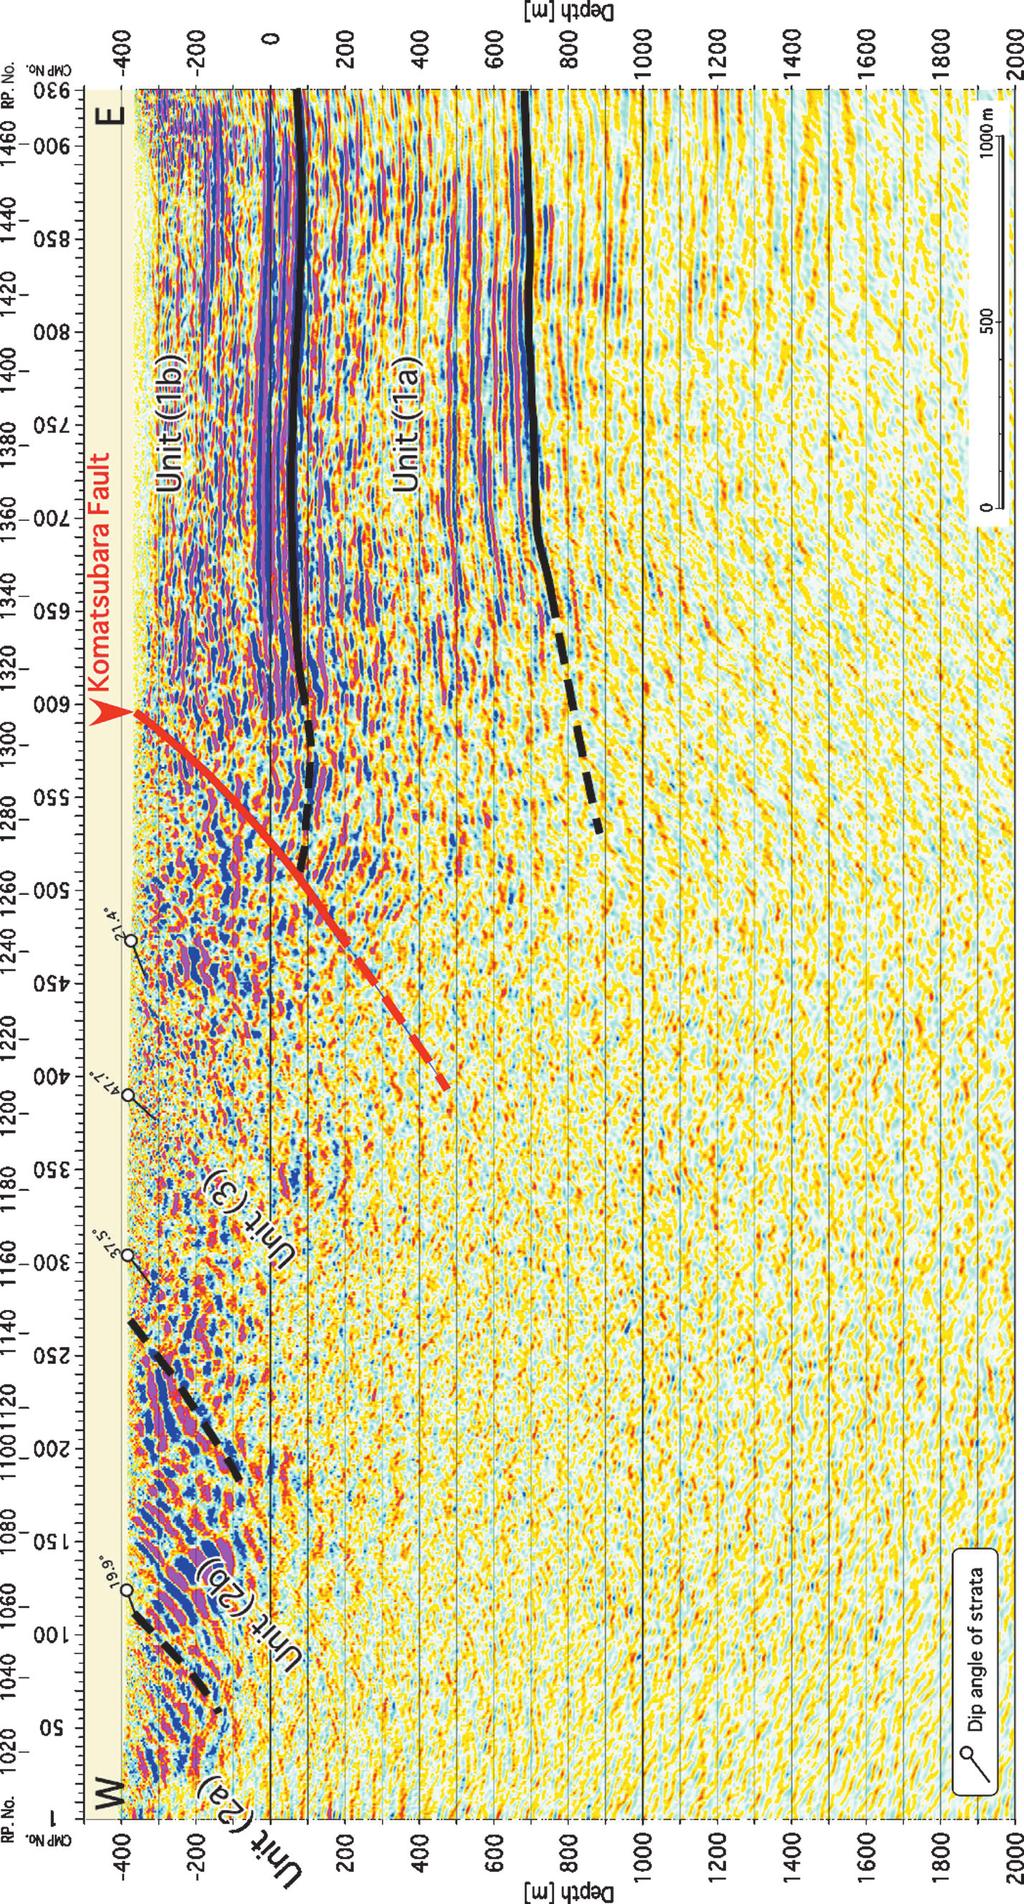 Fig. +*. Geologic interpretation of the depth converted seismic section.